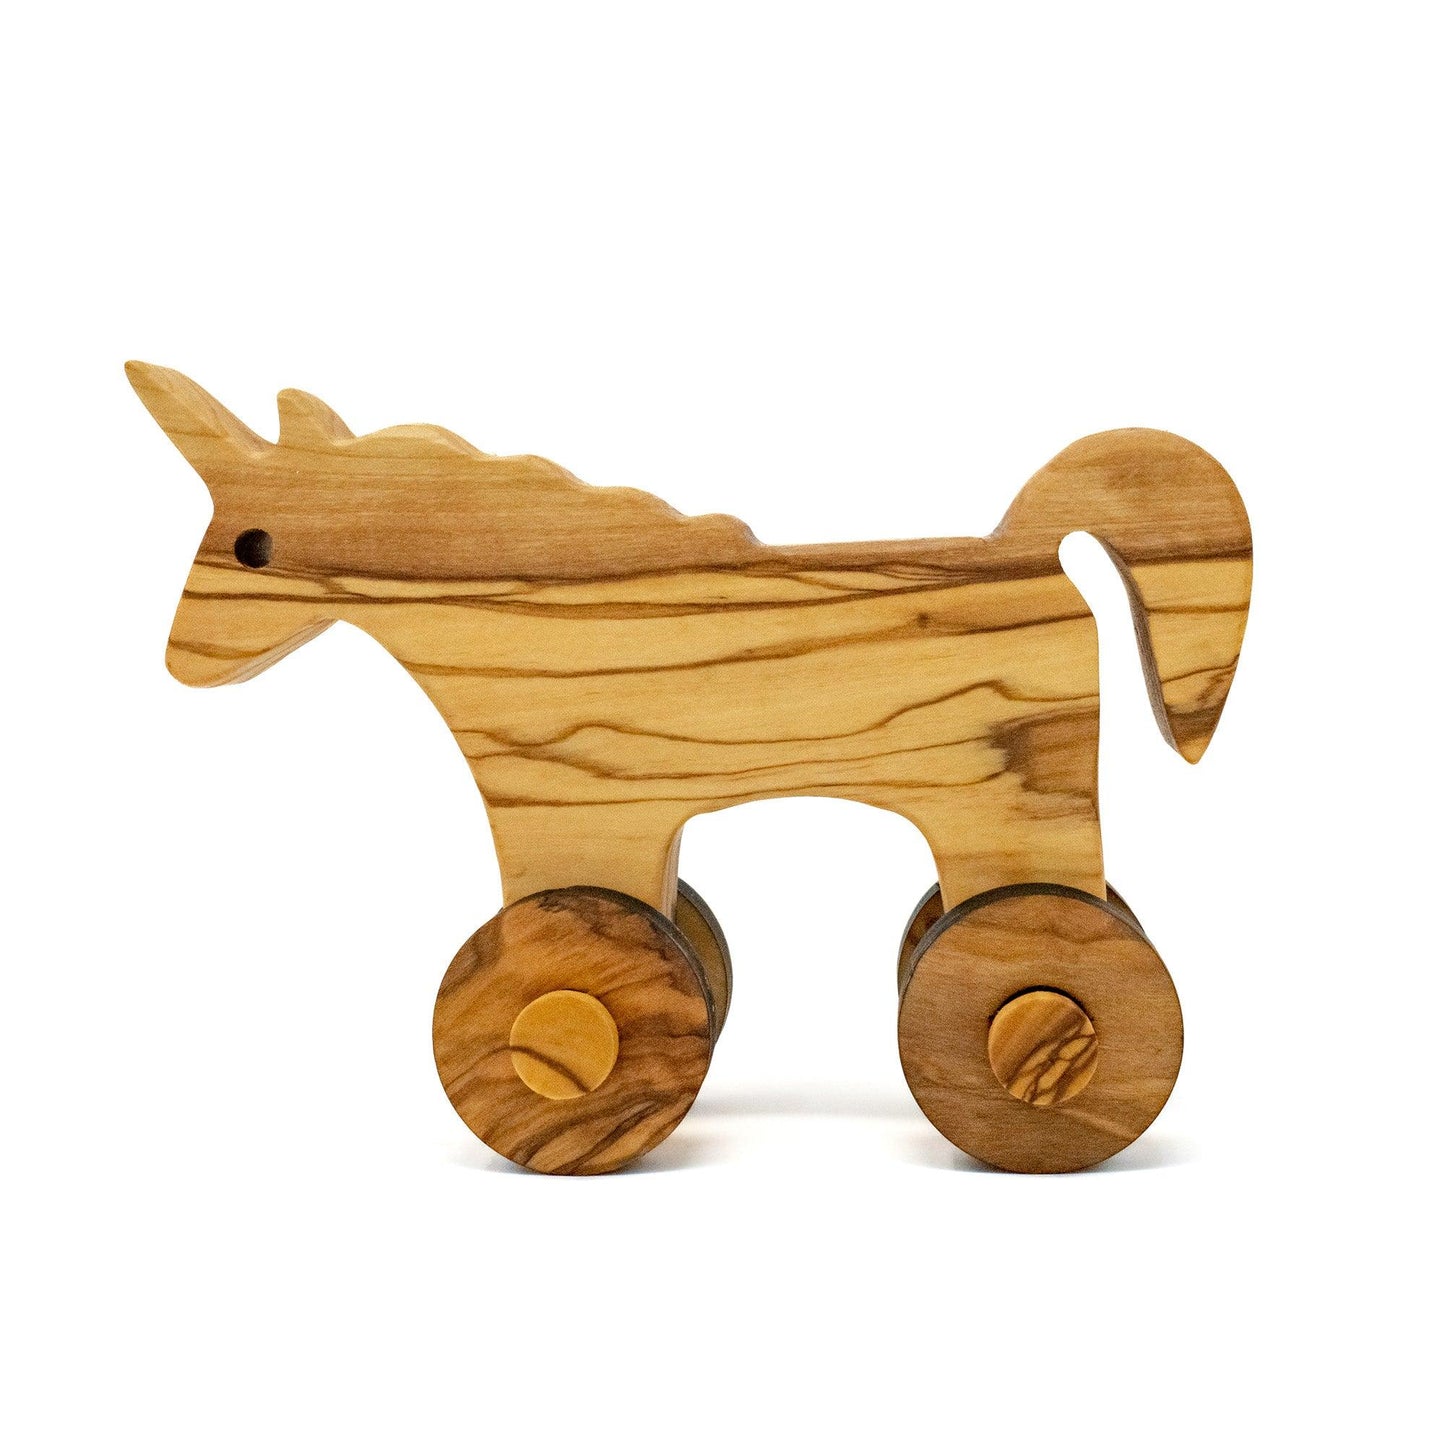 Handmade wooden figure toys, unicorn